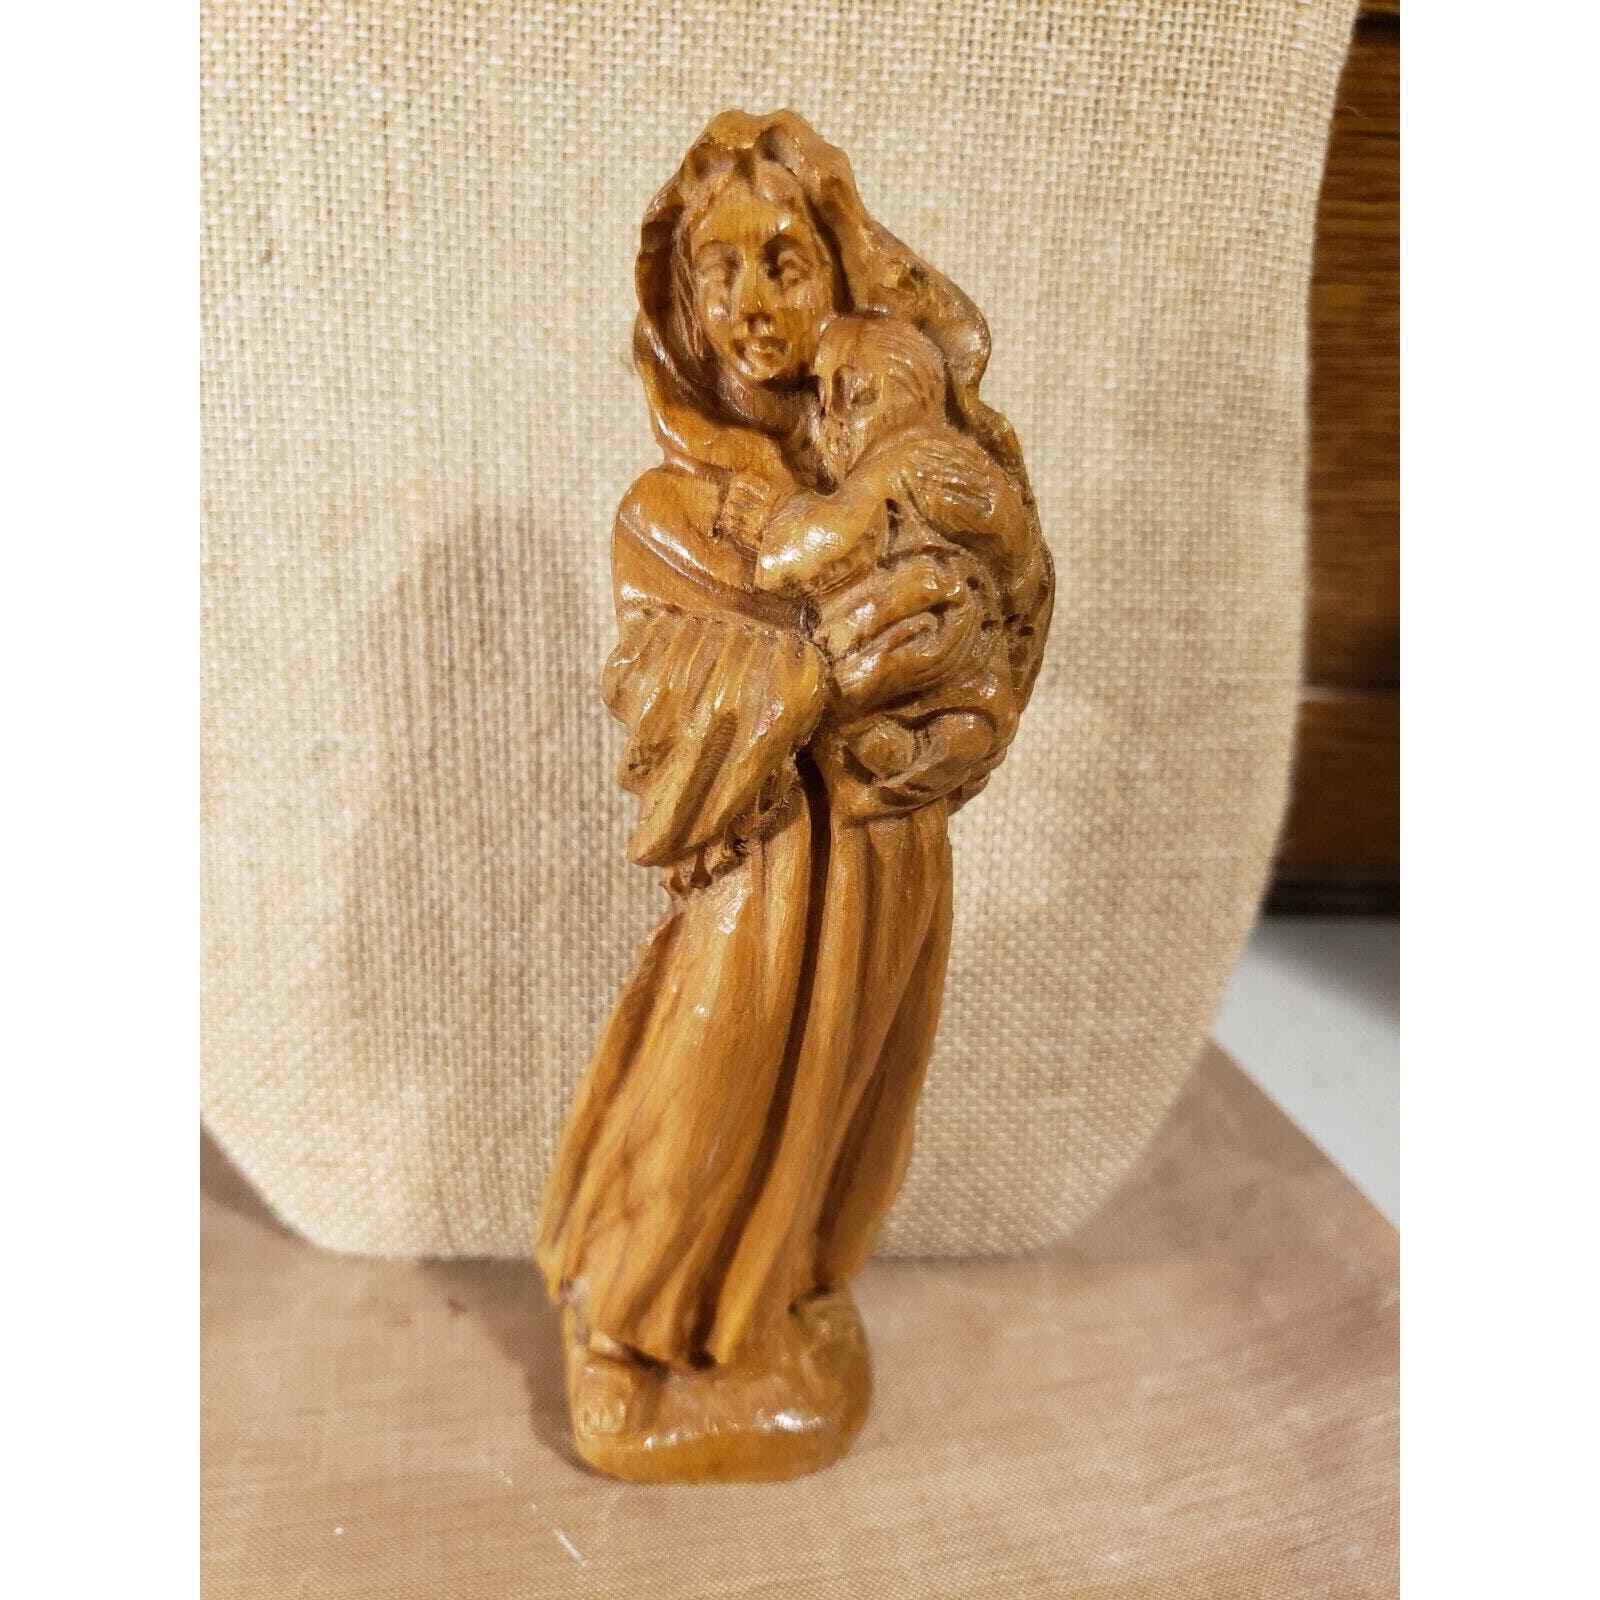 Vintage Olive Wood Carving of Madonna Mary & Child Jesus Made in Bethlehem 1980s